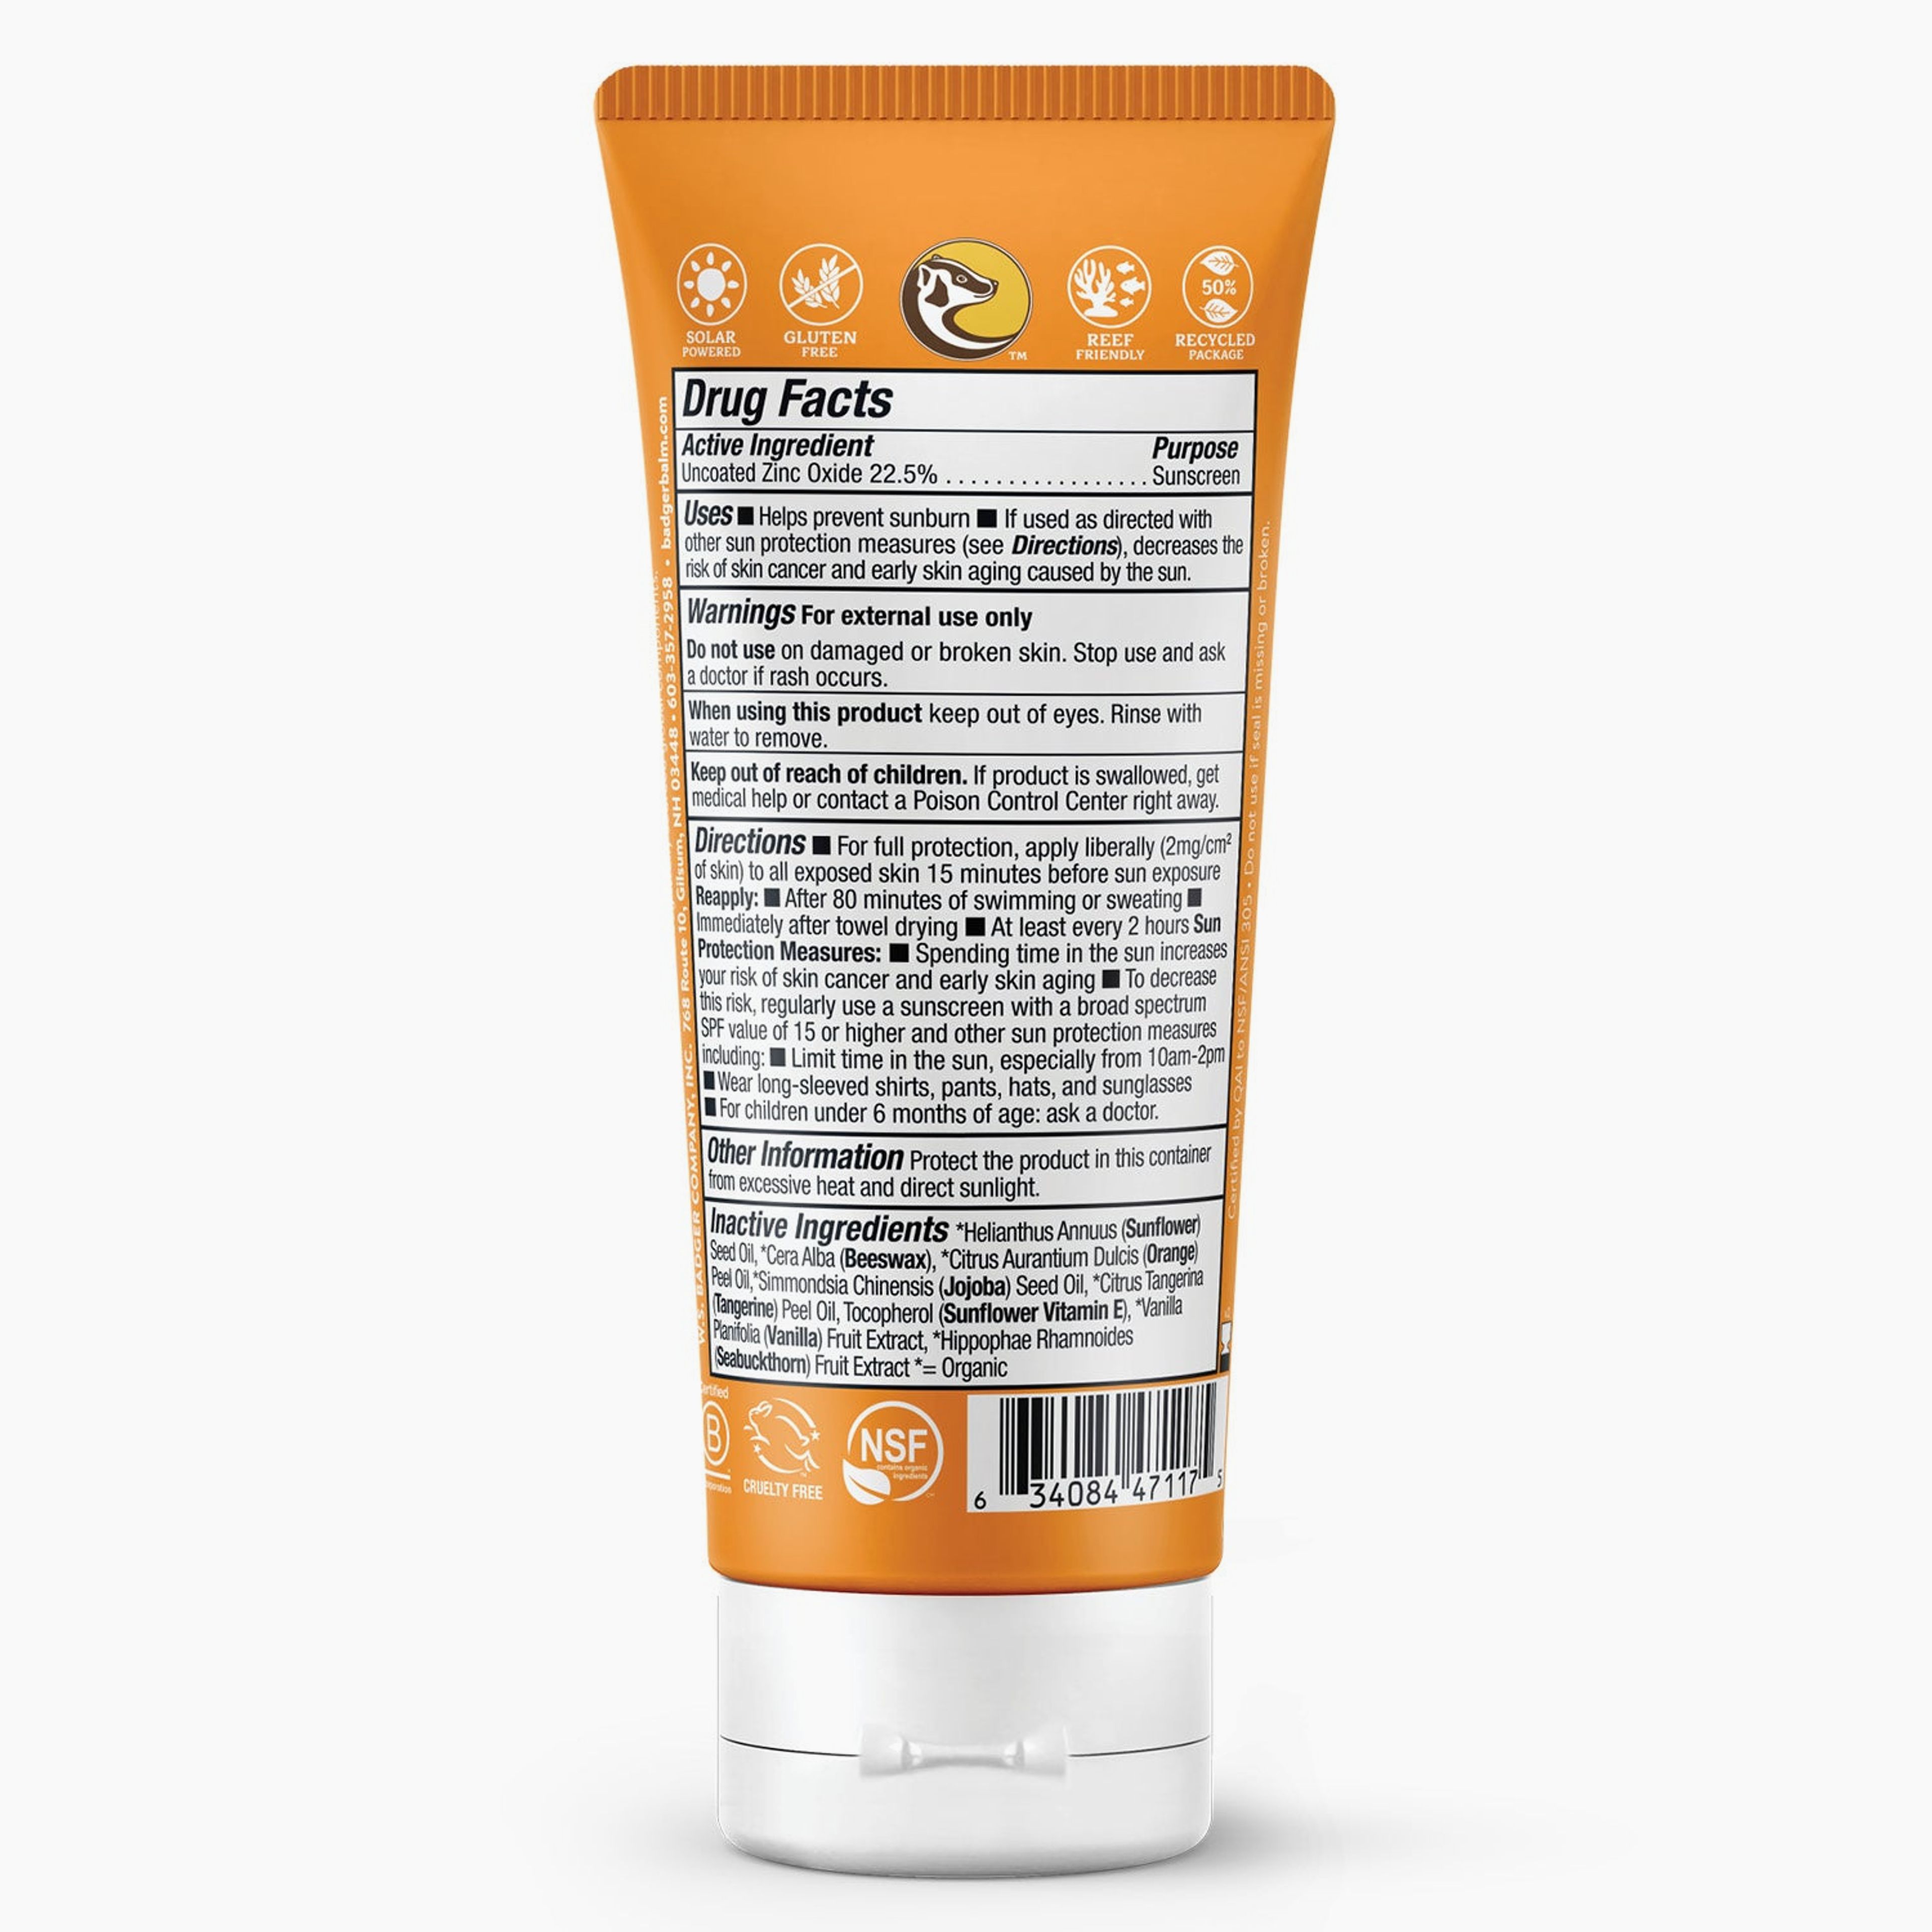 Kids Mineral Sunscreen Cream - SPF 40